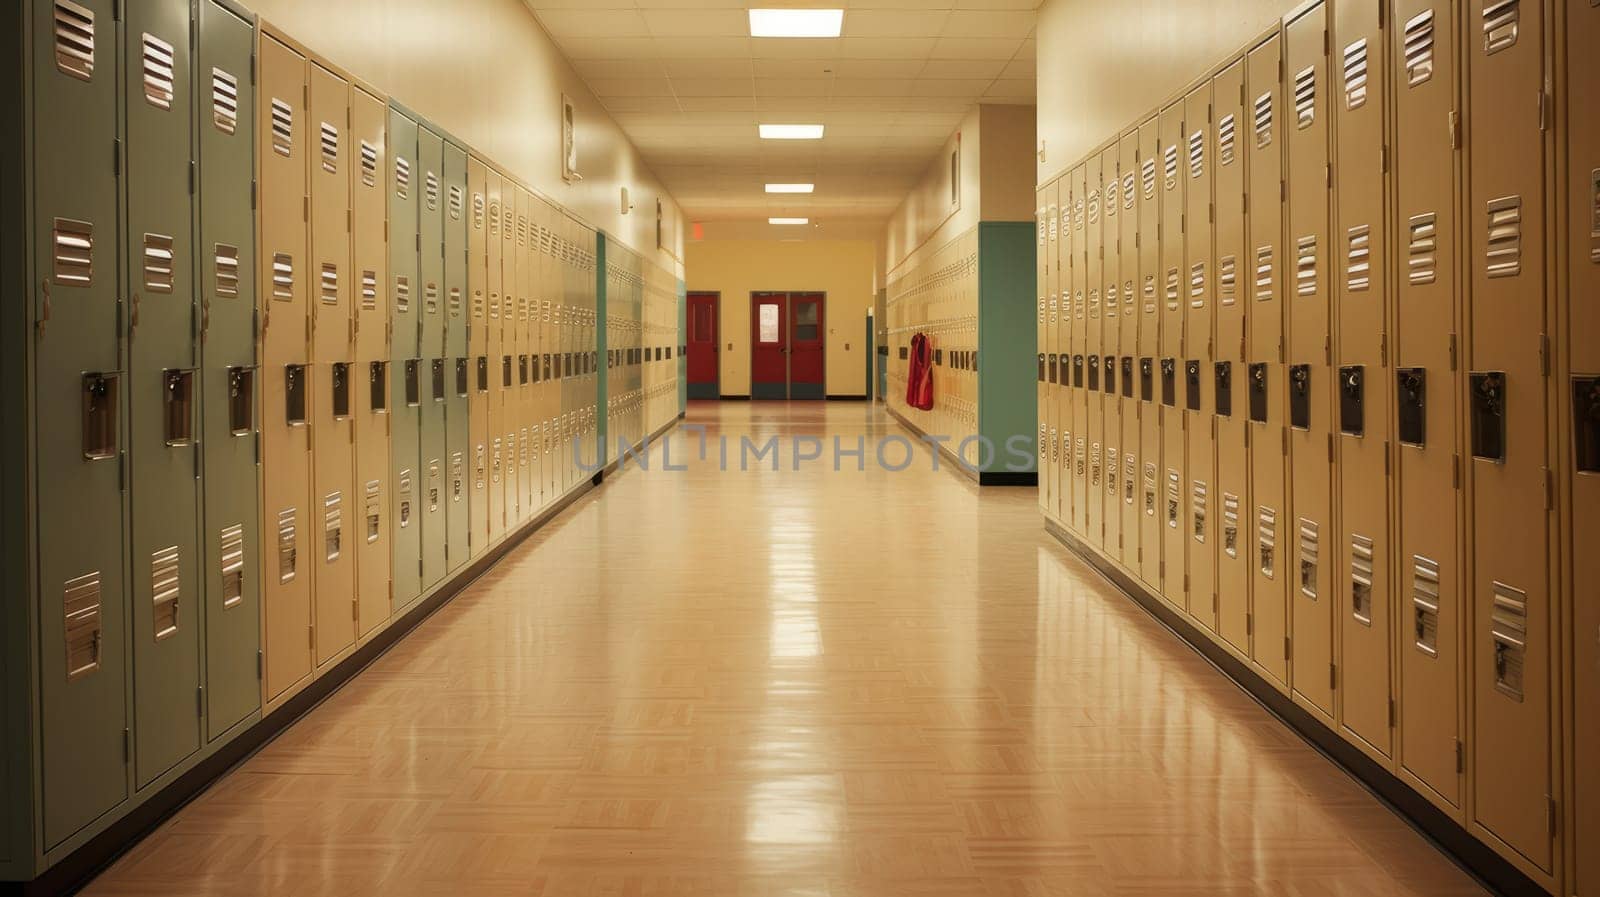 High school hallway with lockers by natali_brill